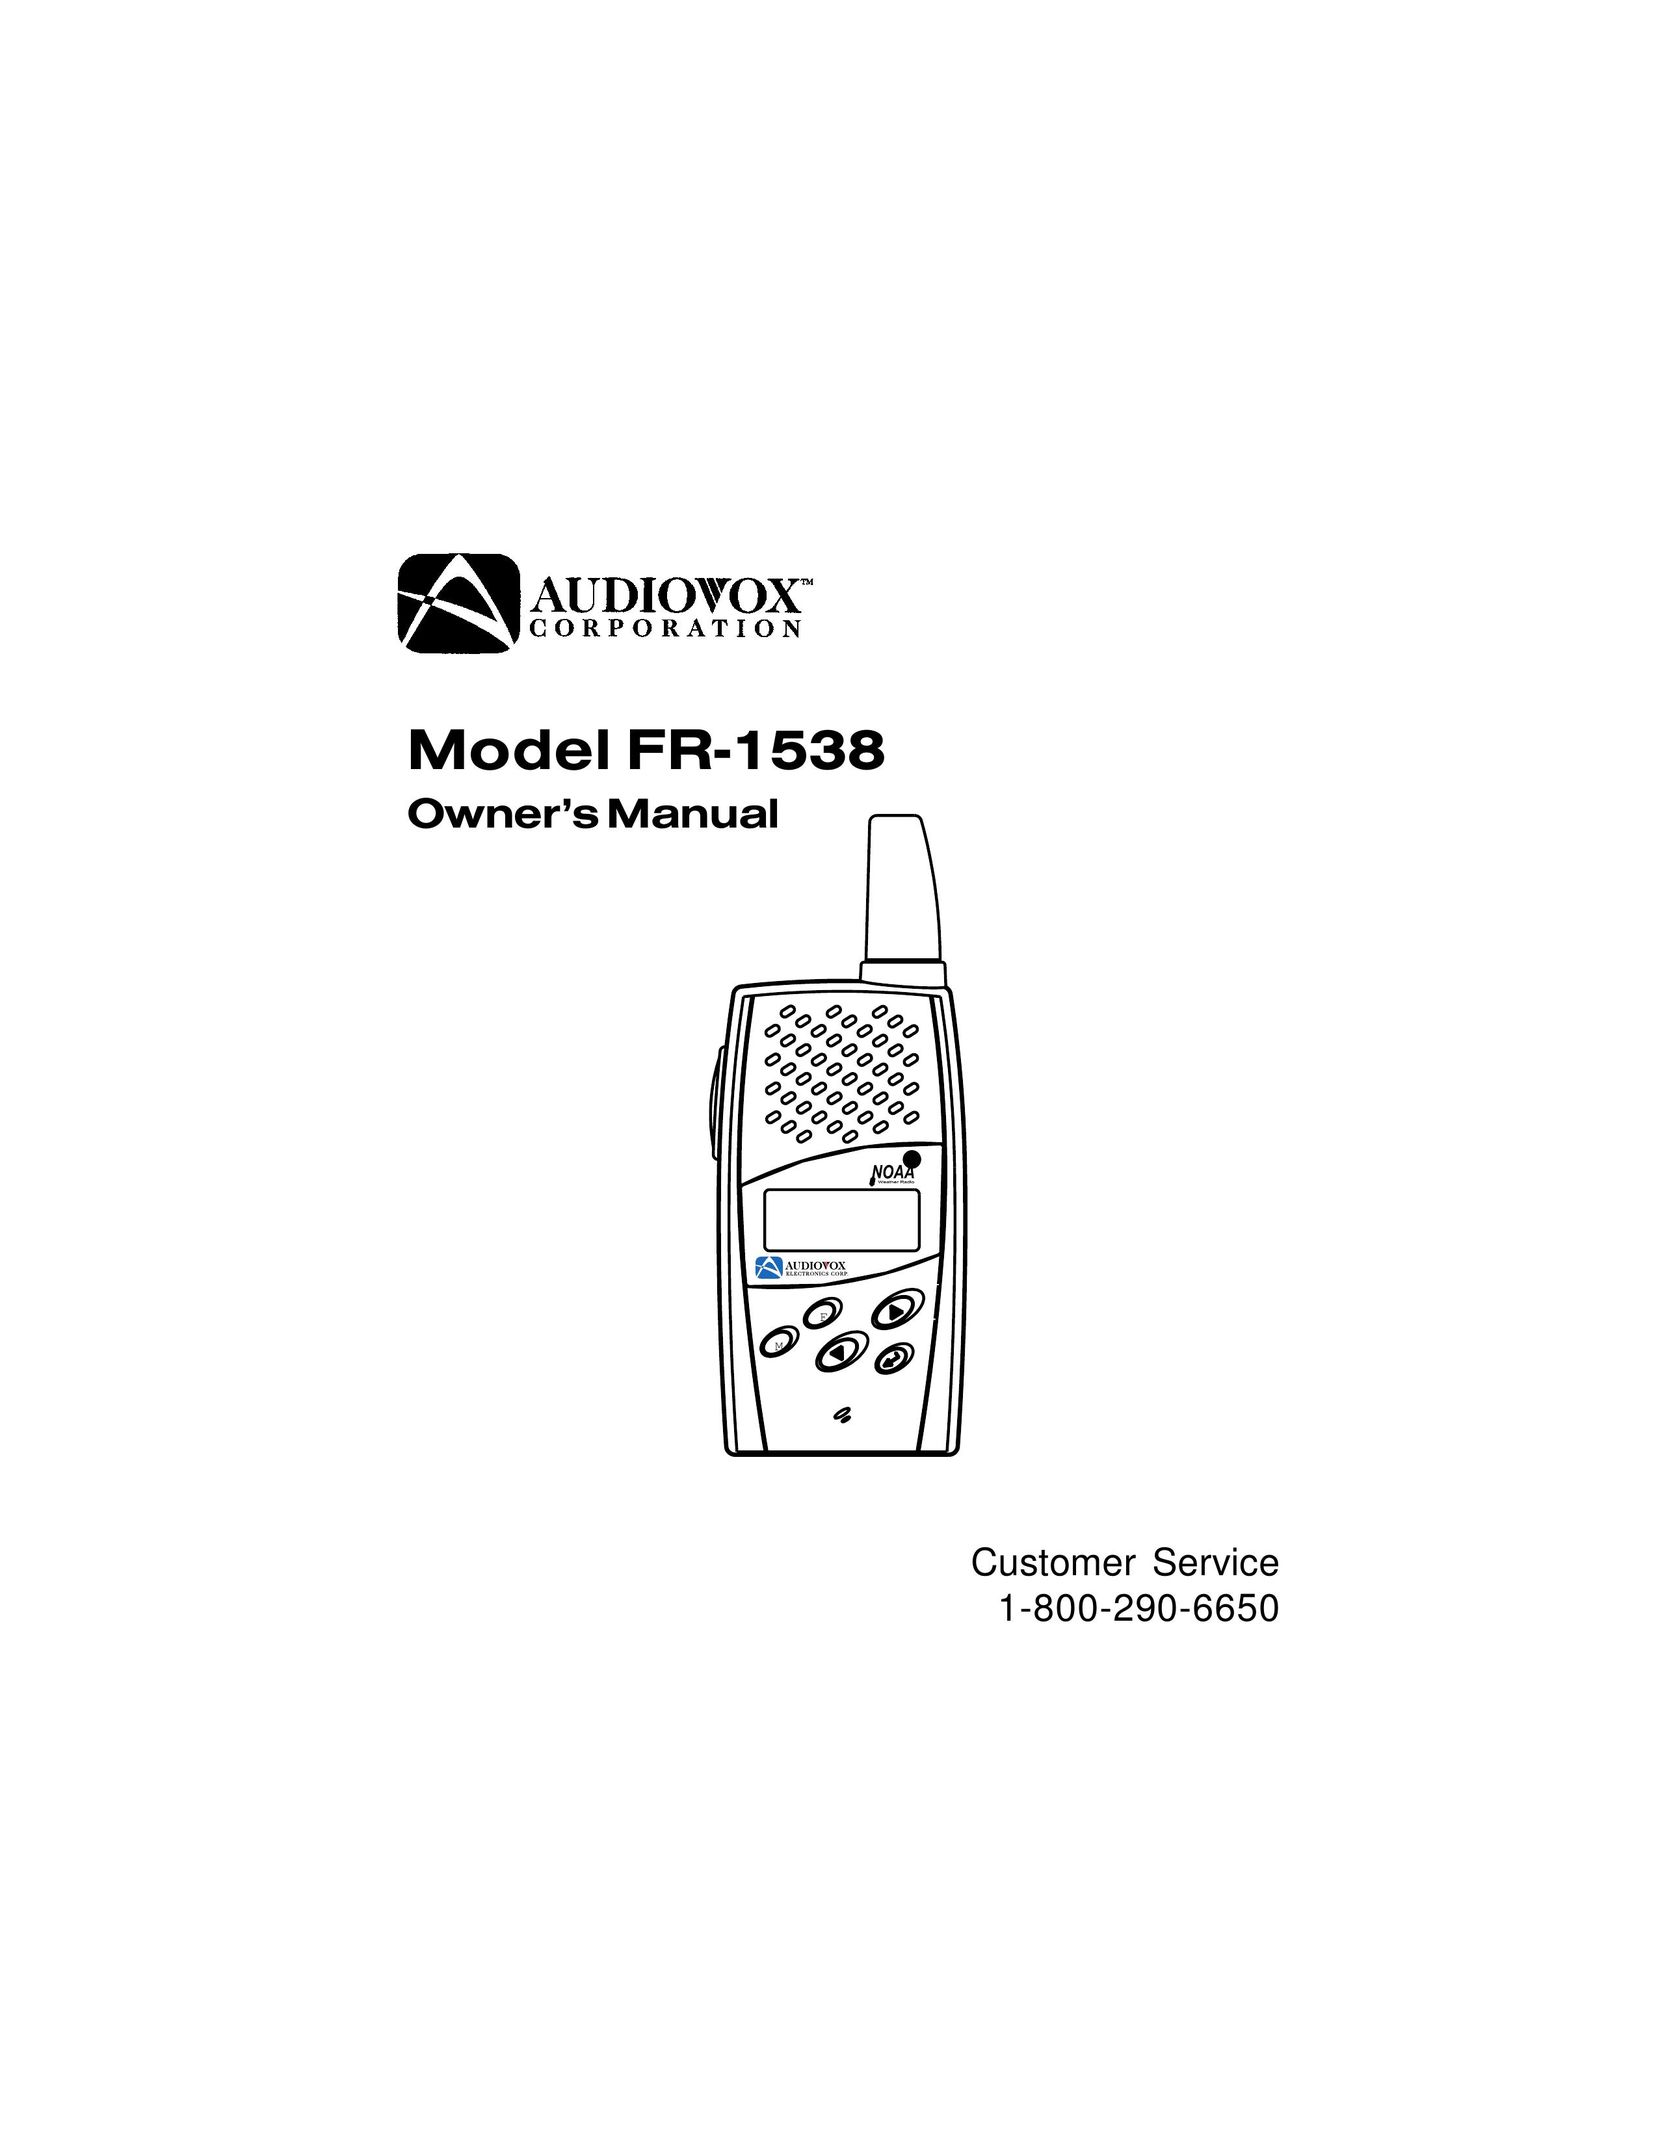 Audiovox FR-1538 Two-Way Radio User Manual